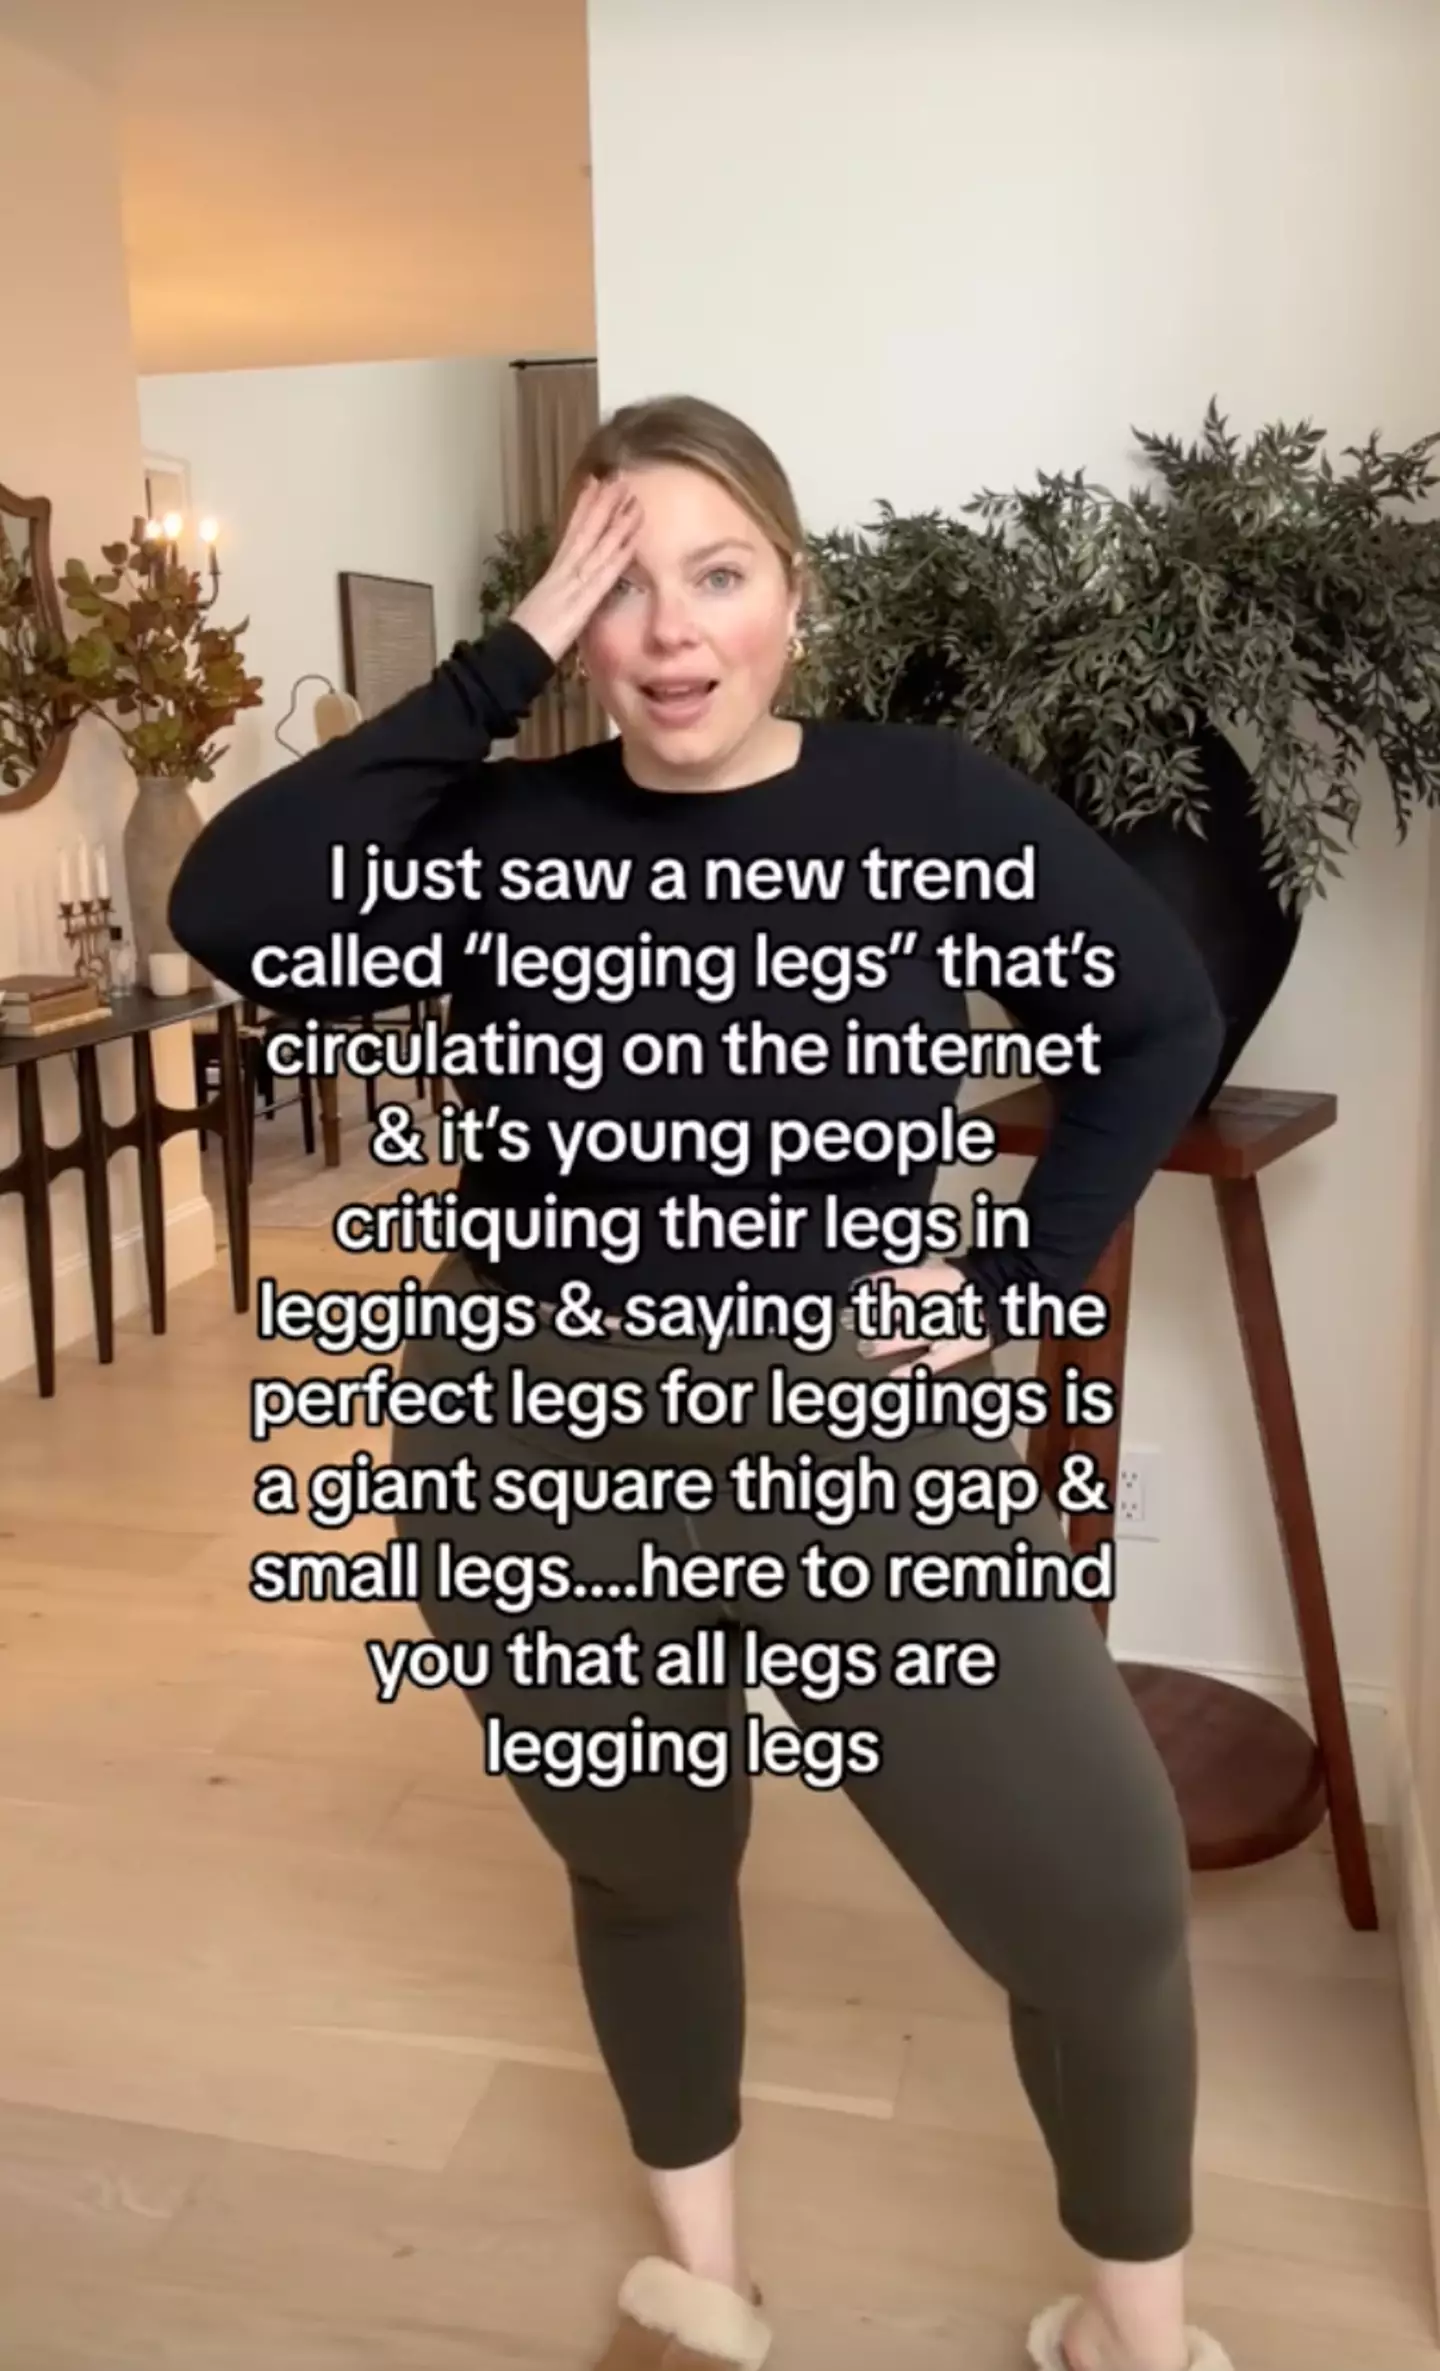 The hashtag #legginglegs has been doing the rounds on TikTok.